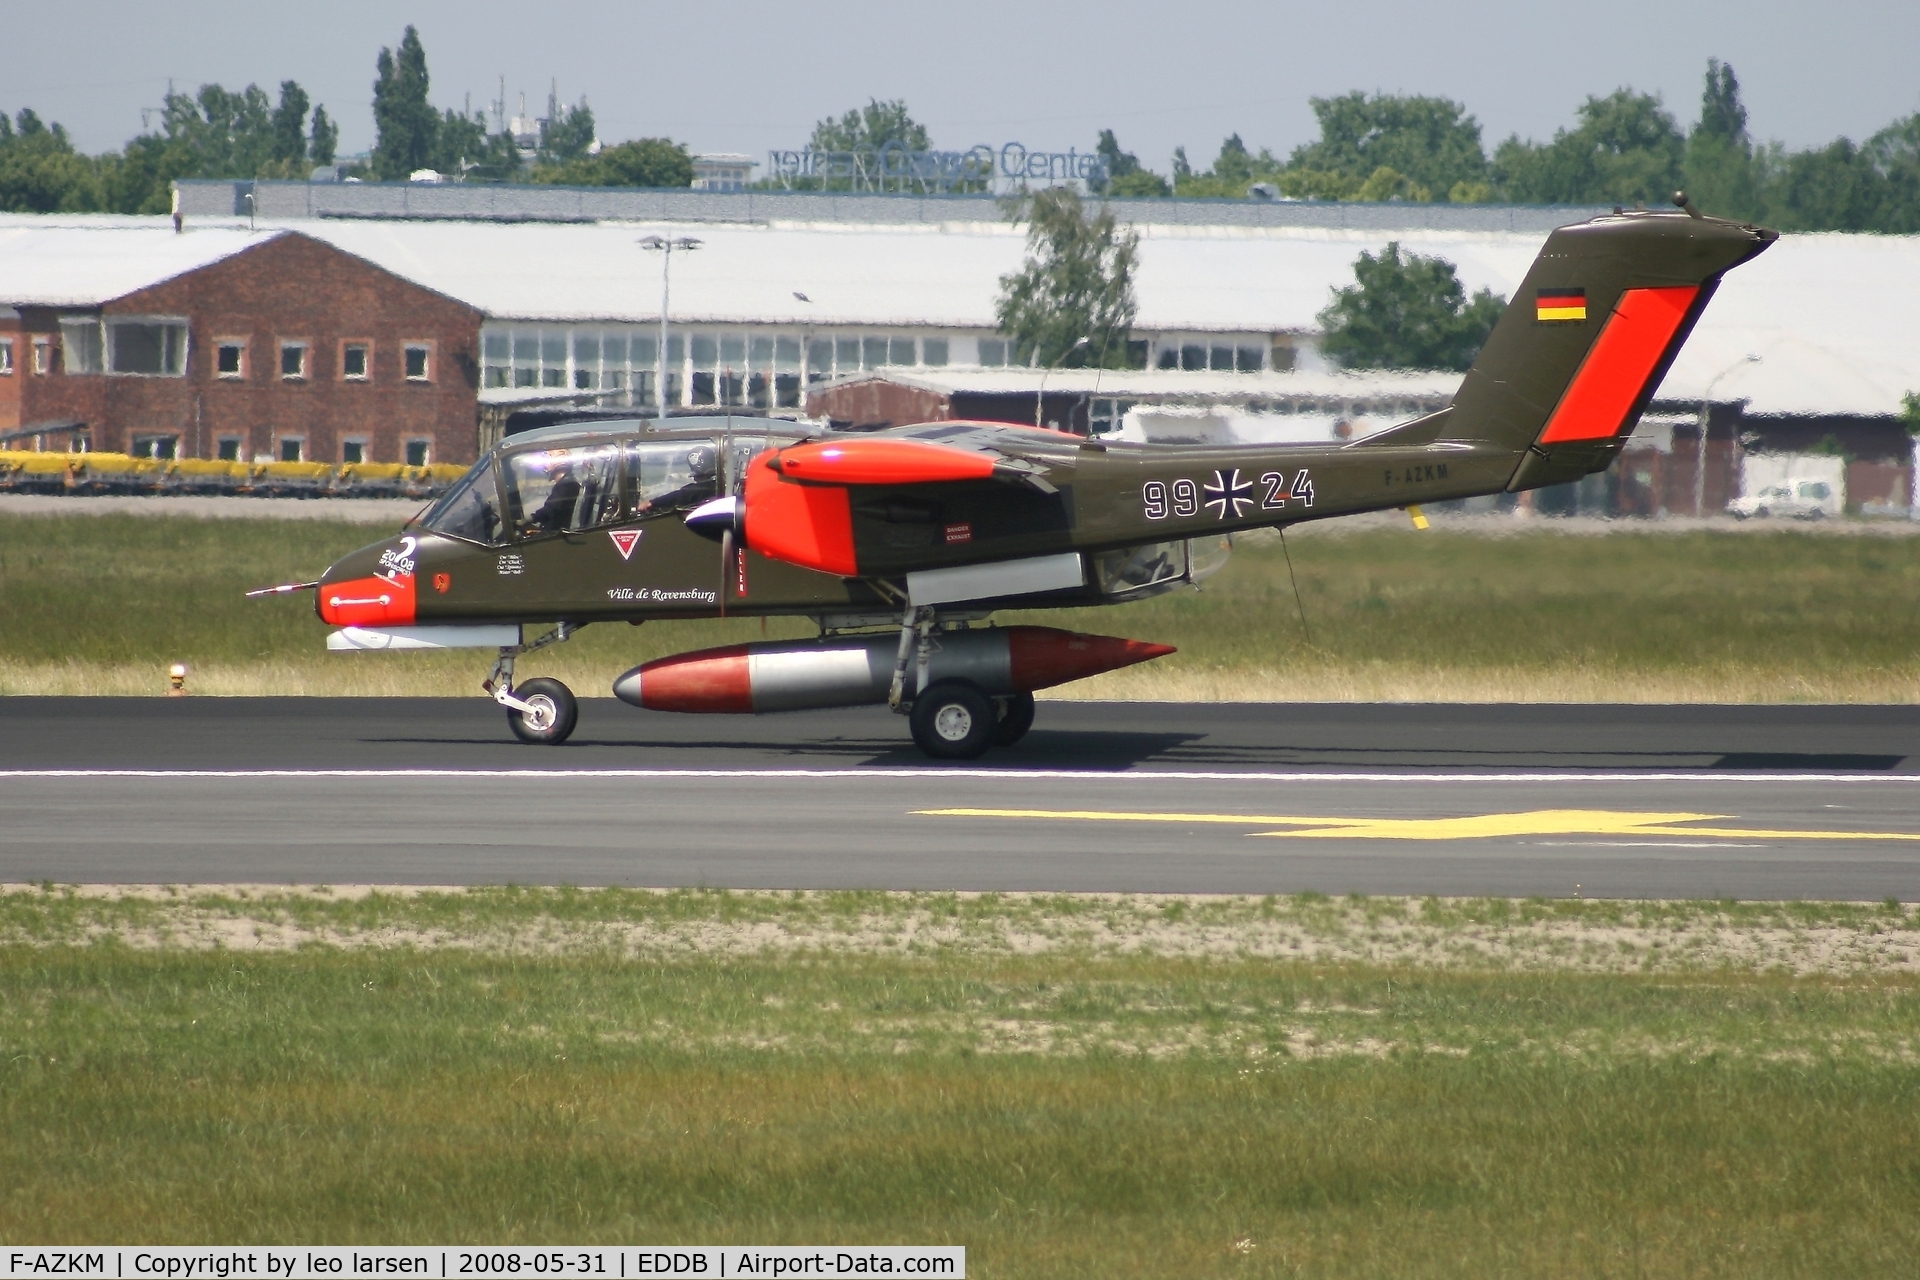 F-AZKM, 1971 North American OV-10B Bronco C/N 338-9 (305-65), Berlin Air Show 31.8.08